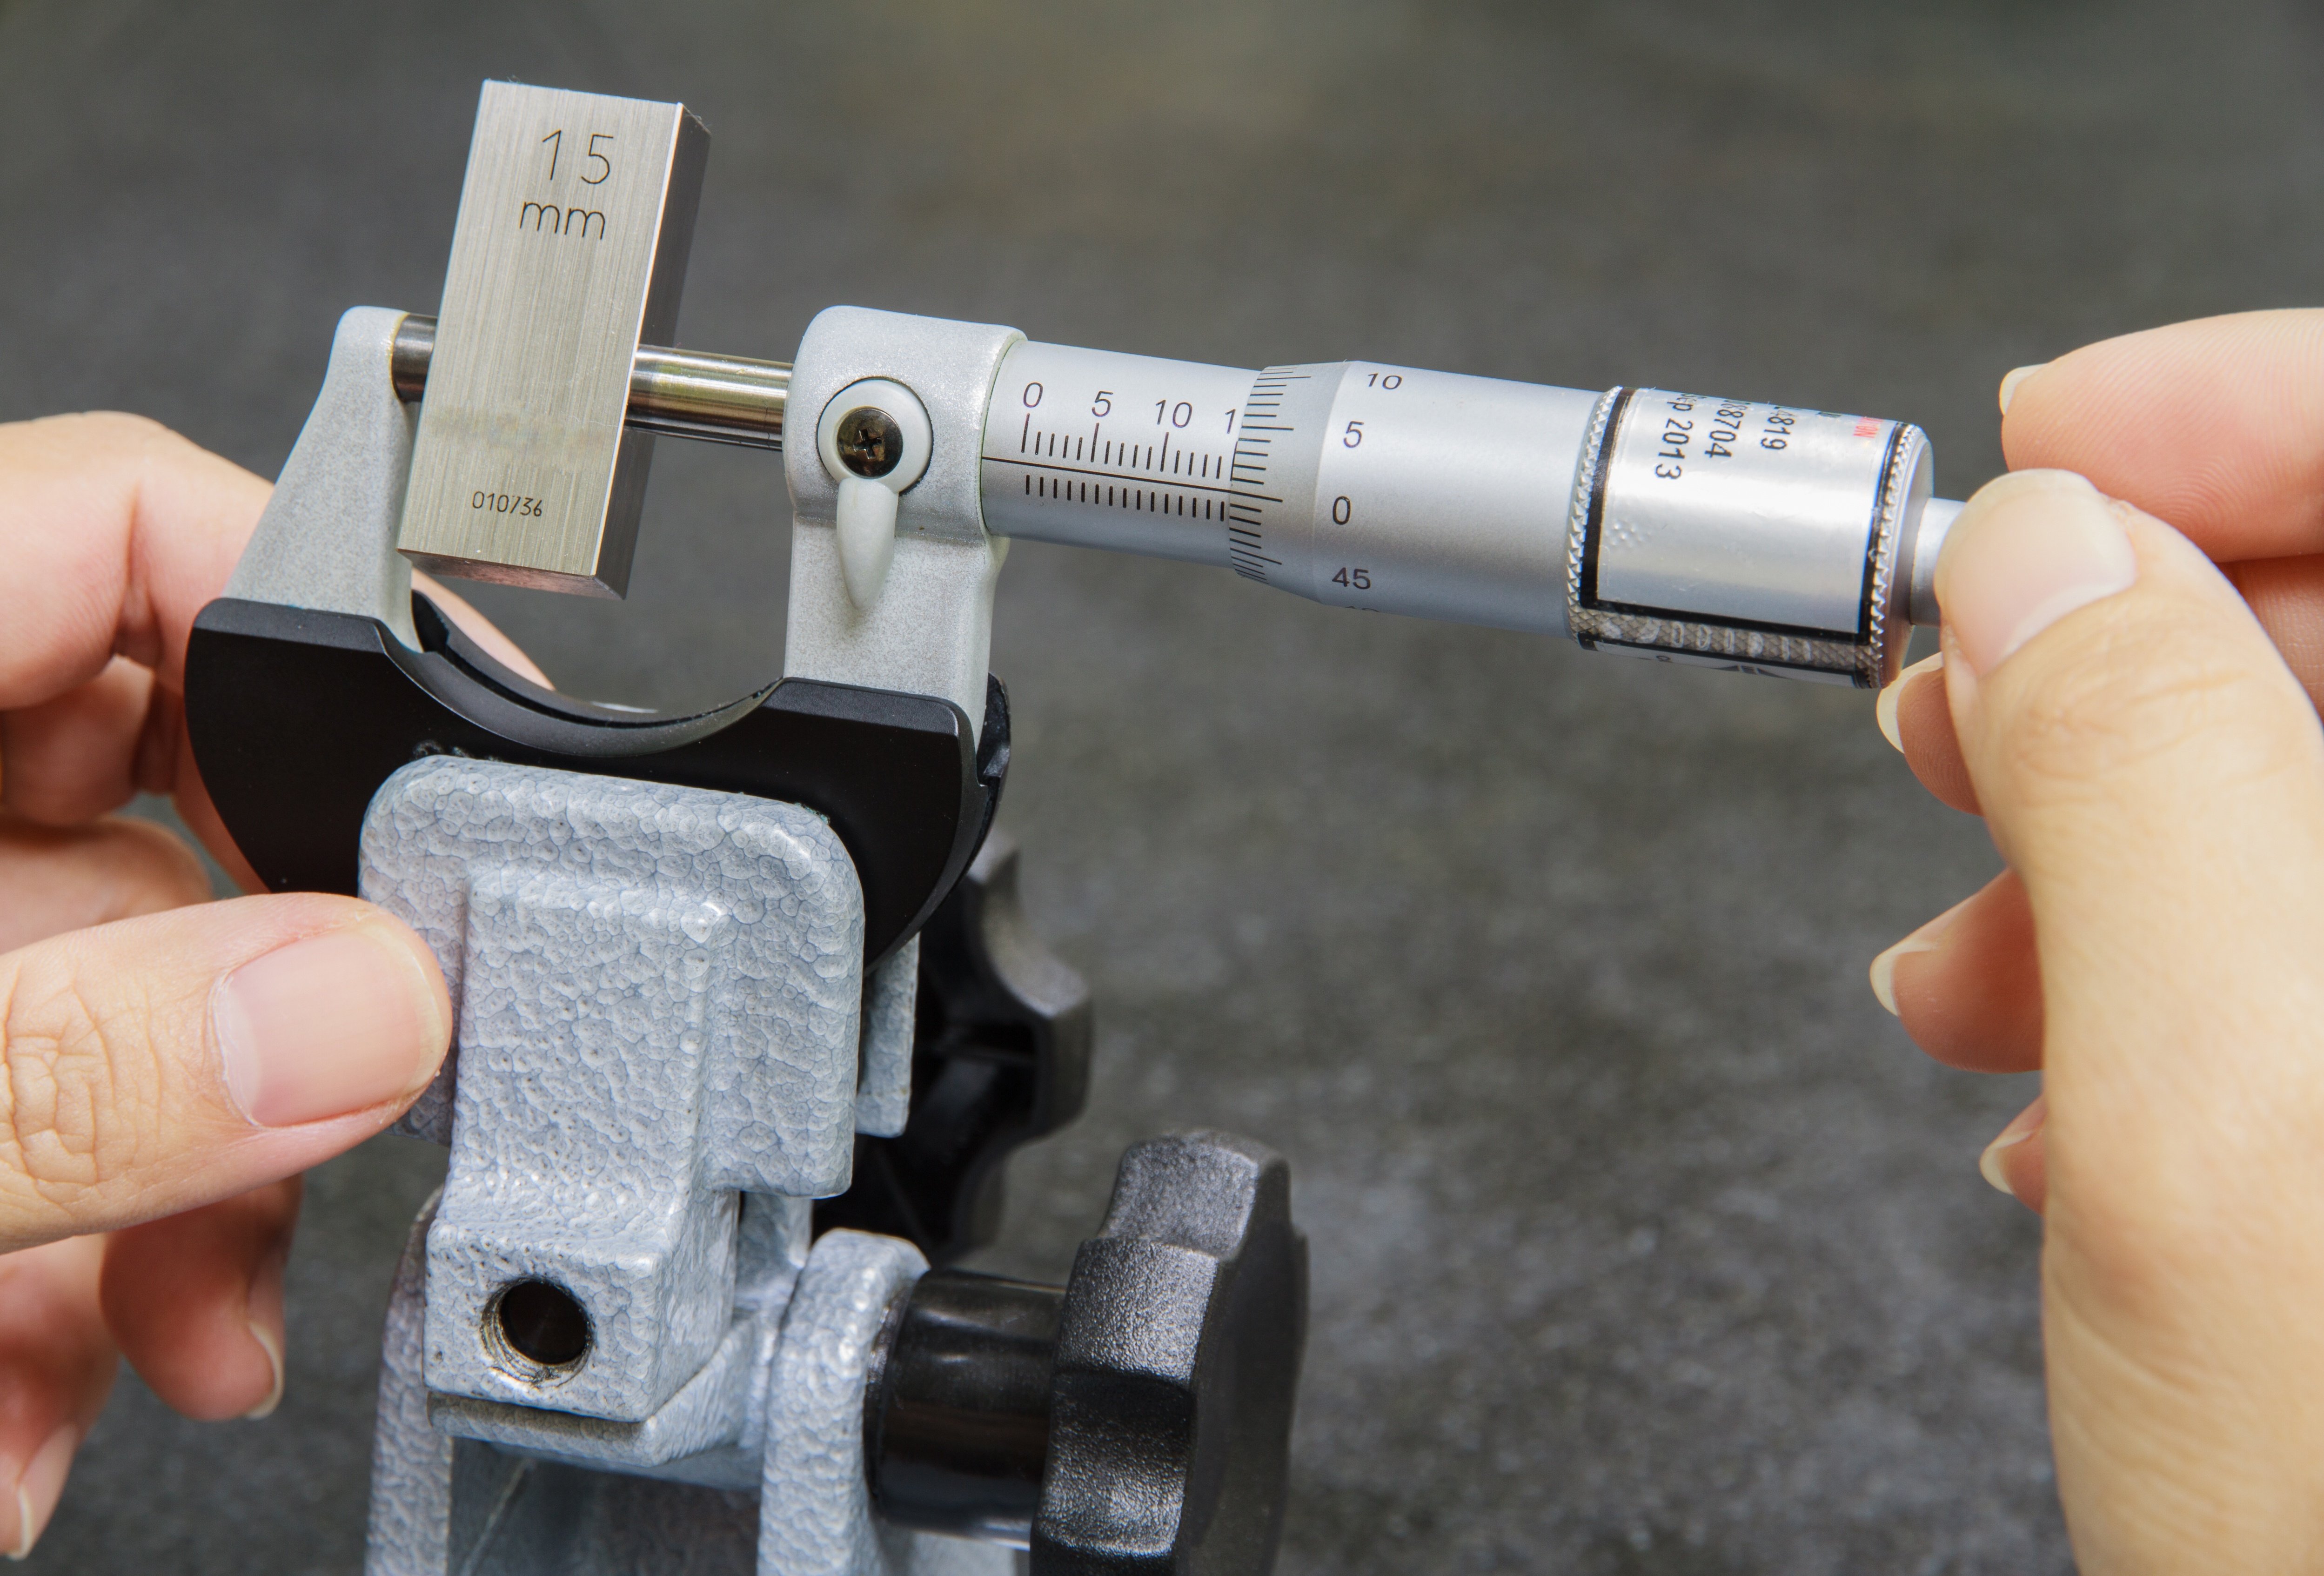 How Often Should I Calibrate A Pressure Transducer?